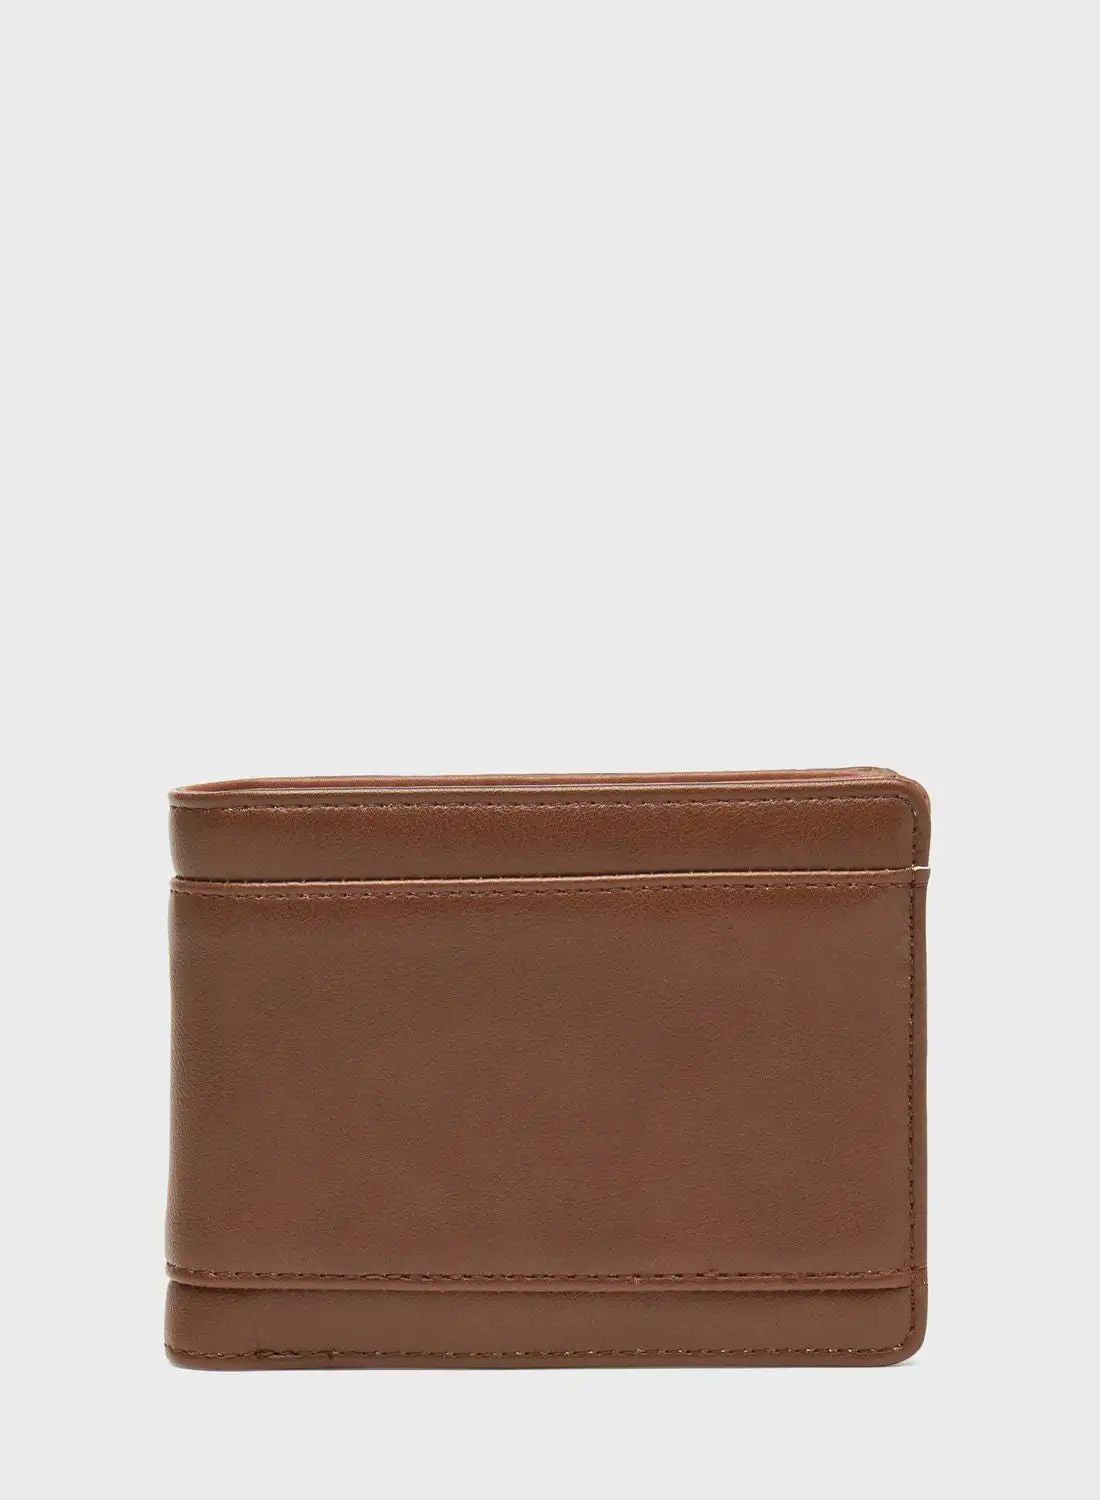 LBL by Shoexpress Essential Bifold Wallet